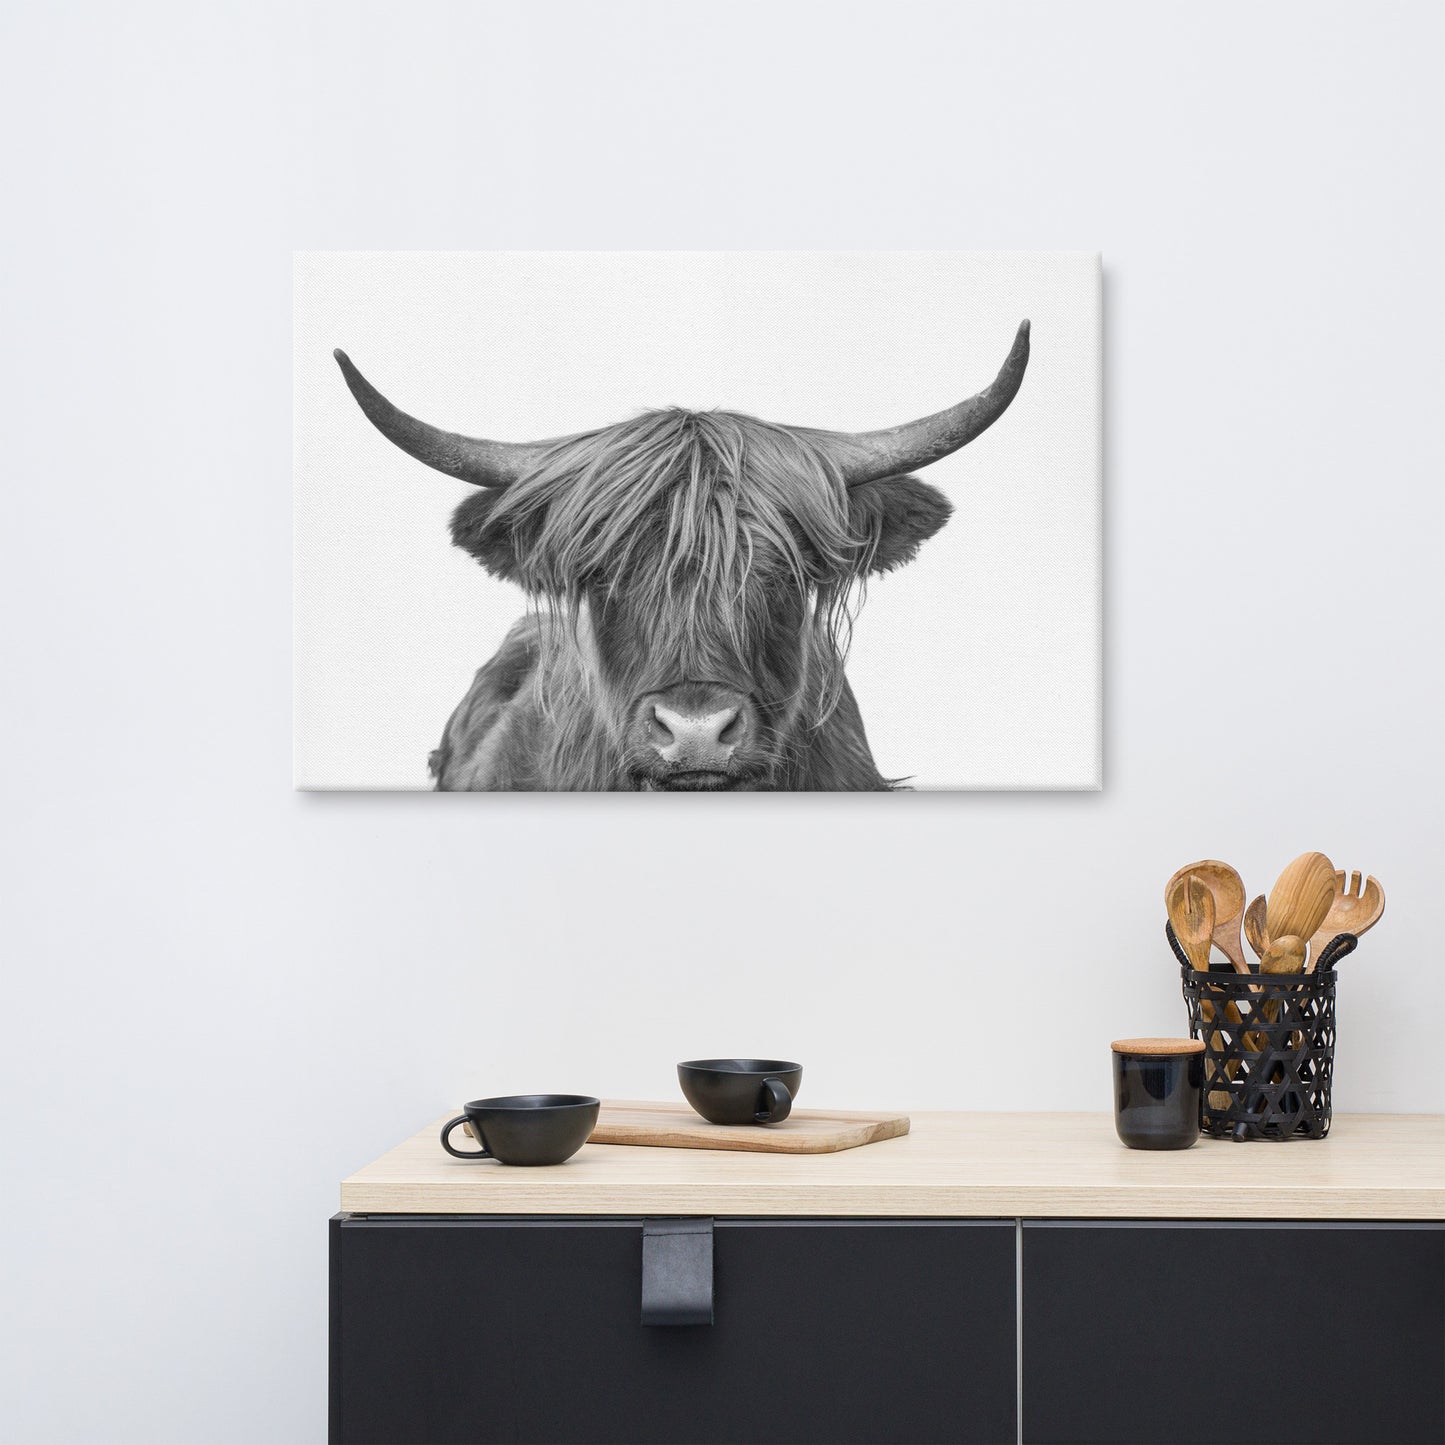 Highland Cow Black and White Wildlife / Animal Photograph Canvas Wall Art Print